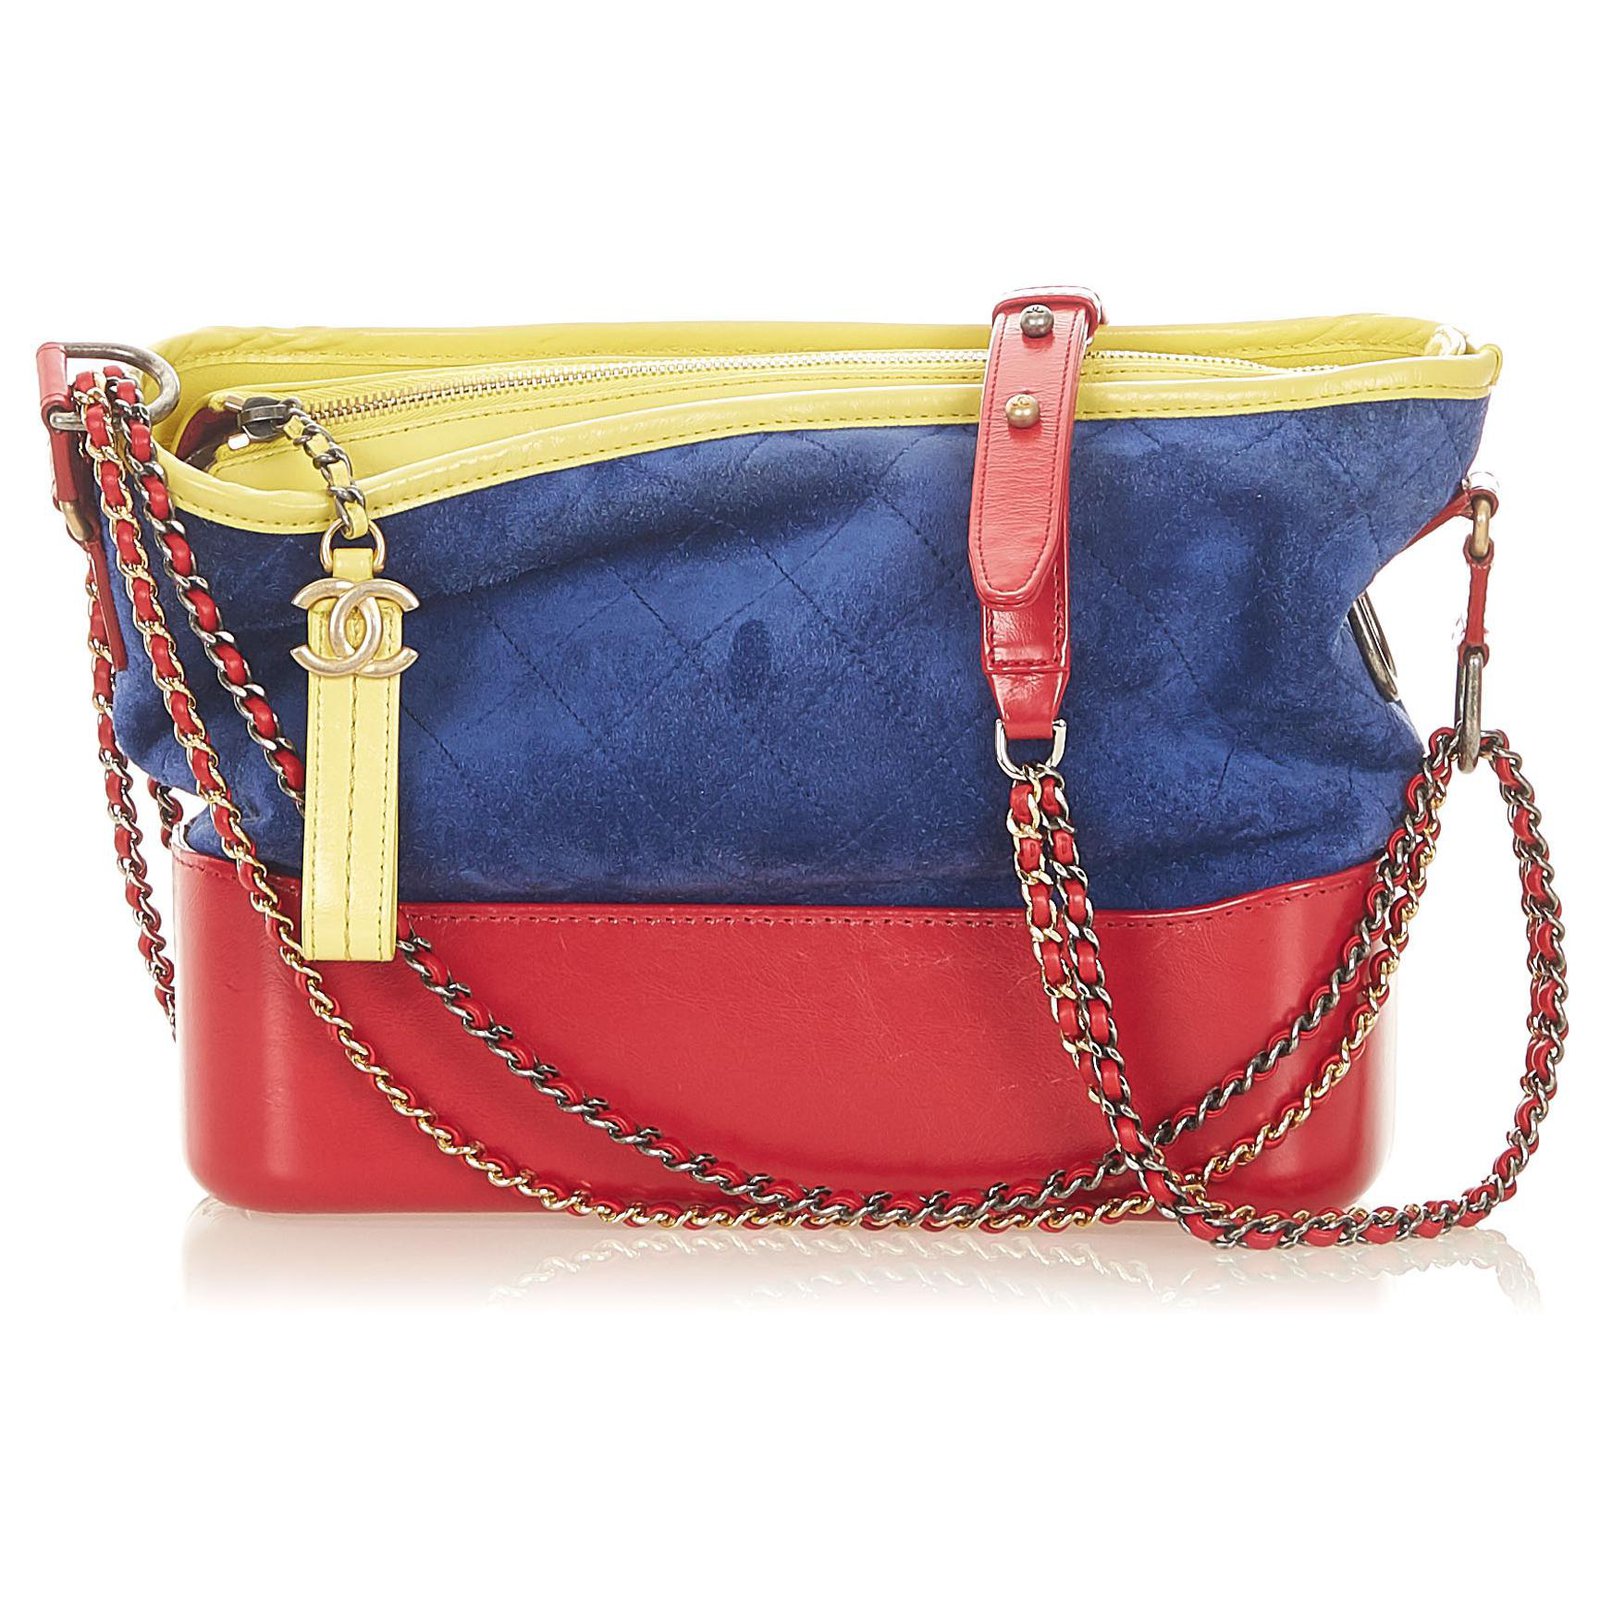 Chanel's Gabrielle Bag with Bi-Color Logo Chain Strap